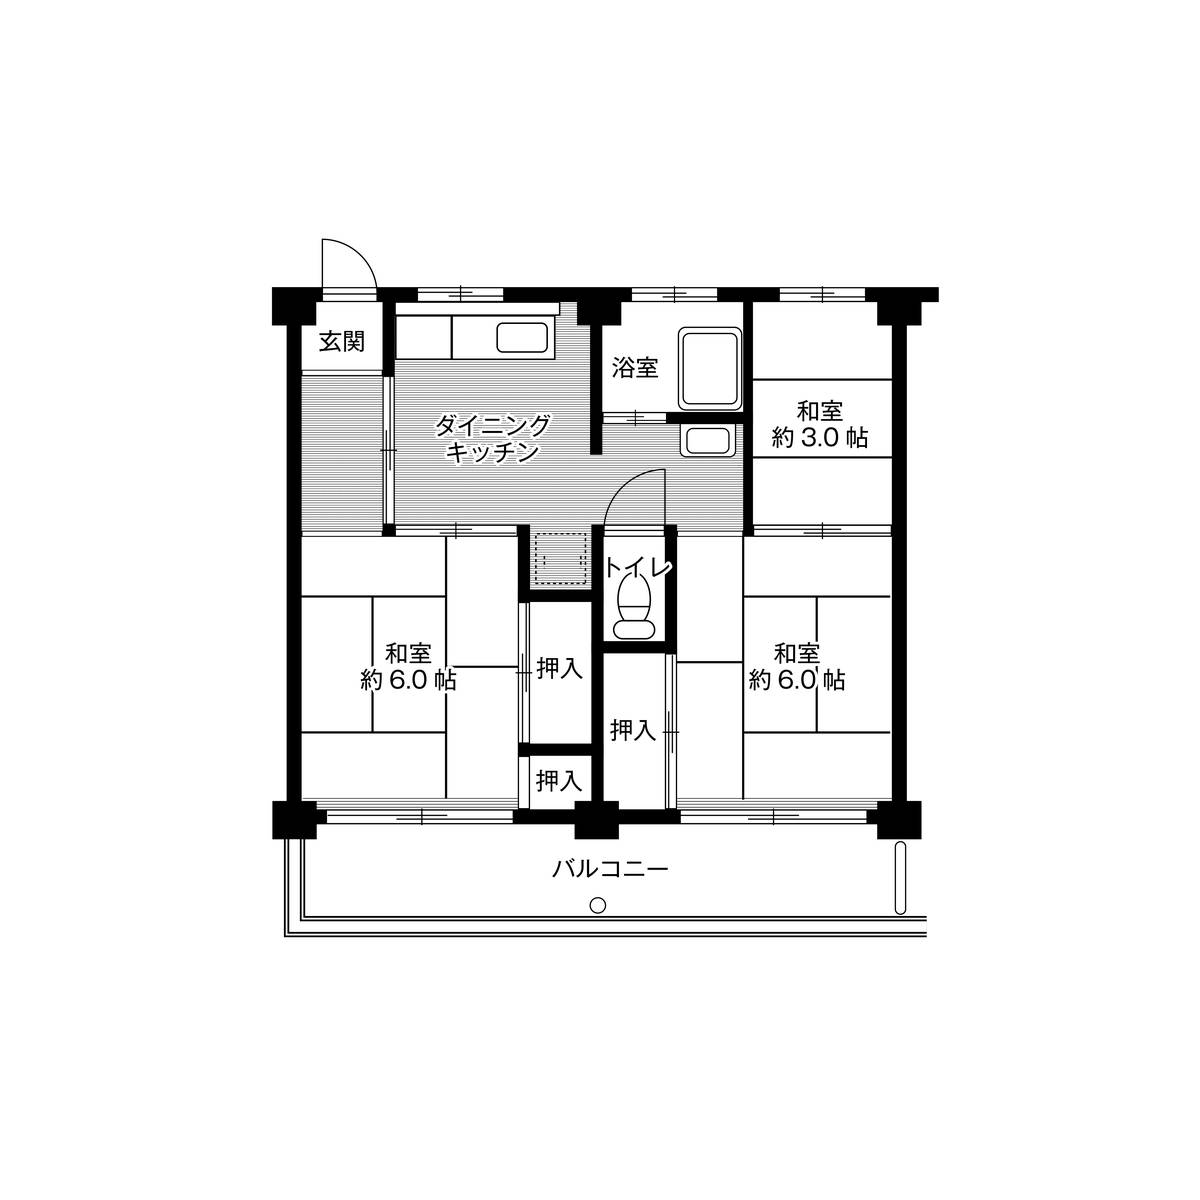 3DK floorplan of Village House Daiwa in Komaki-shi